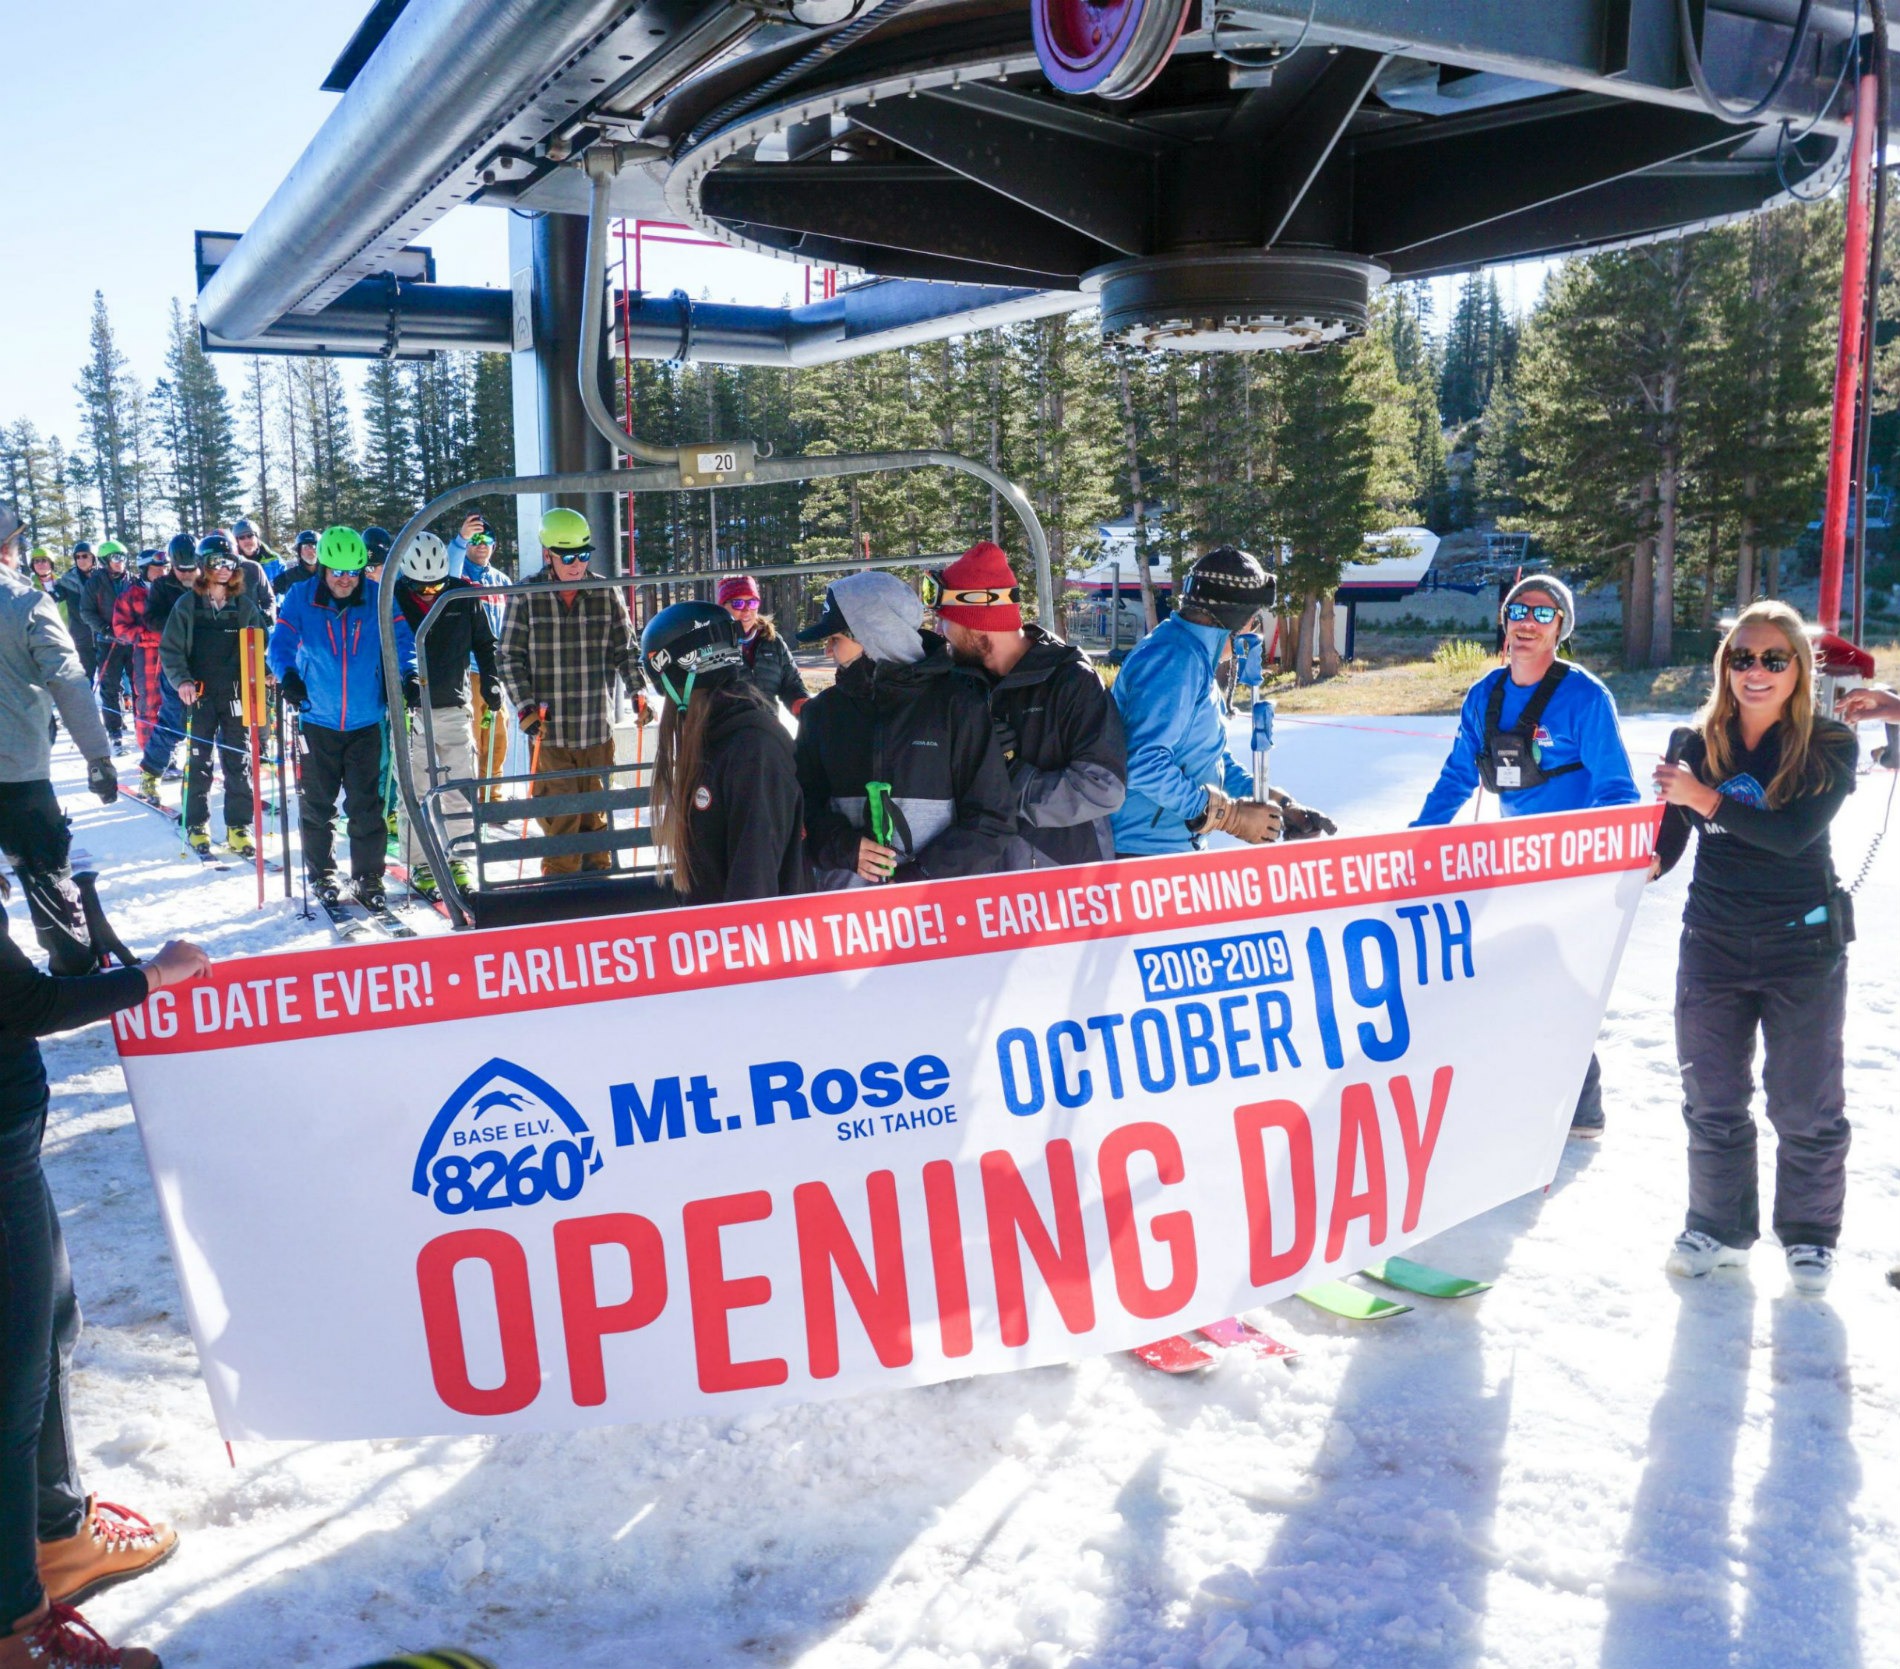 Mt. Rose ski resort opening Dec. 10